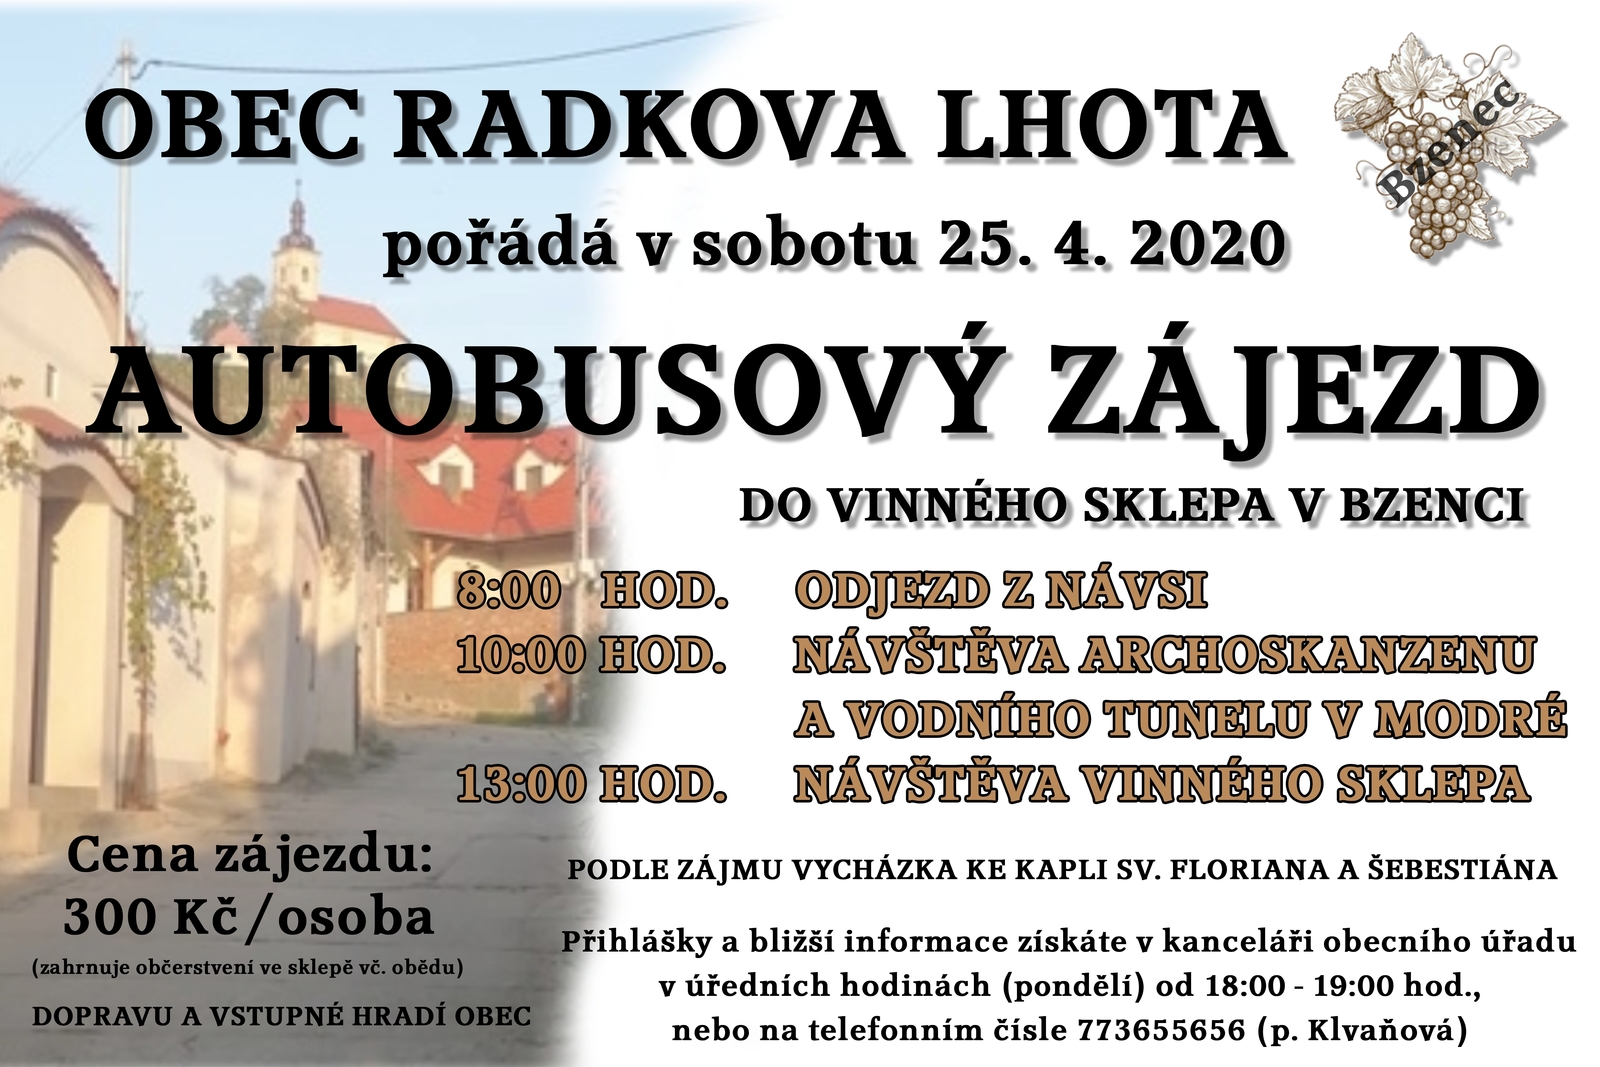 Obec Radkova Lhota pořádá v sobotu 25.4. 2020 autobusový zájezd do vinného sklepa v Bzenci. Cena 300 Kč/ osoba